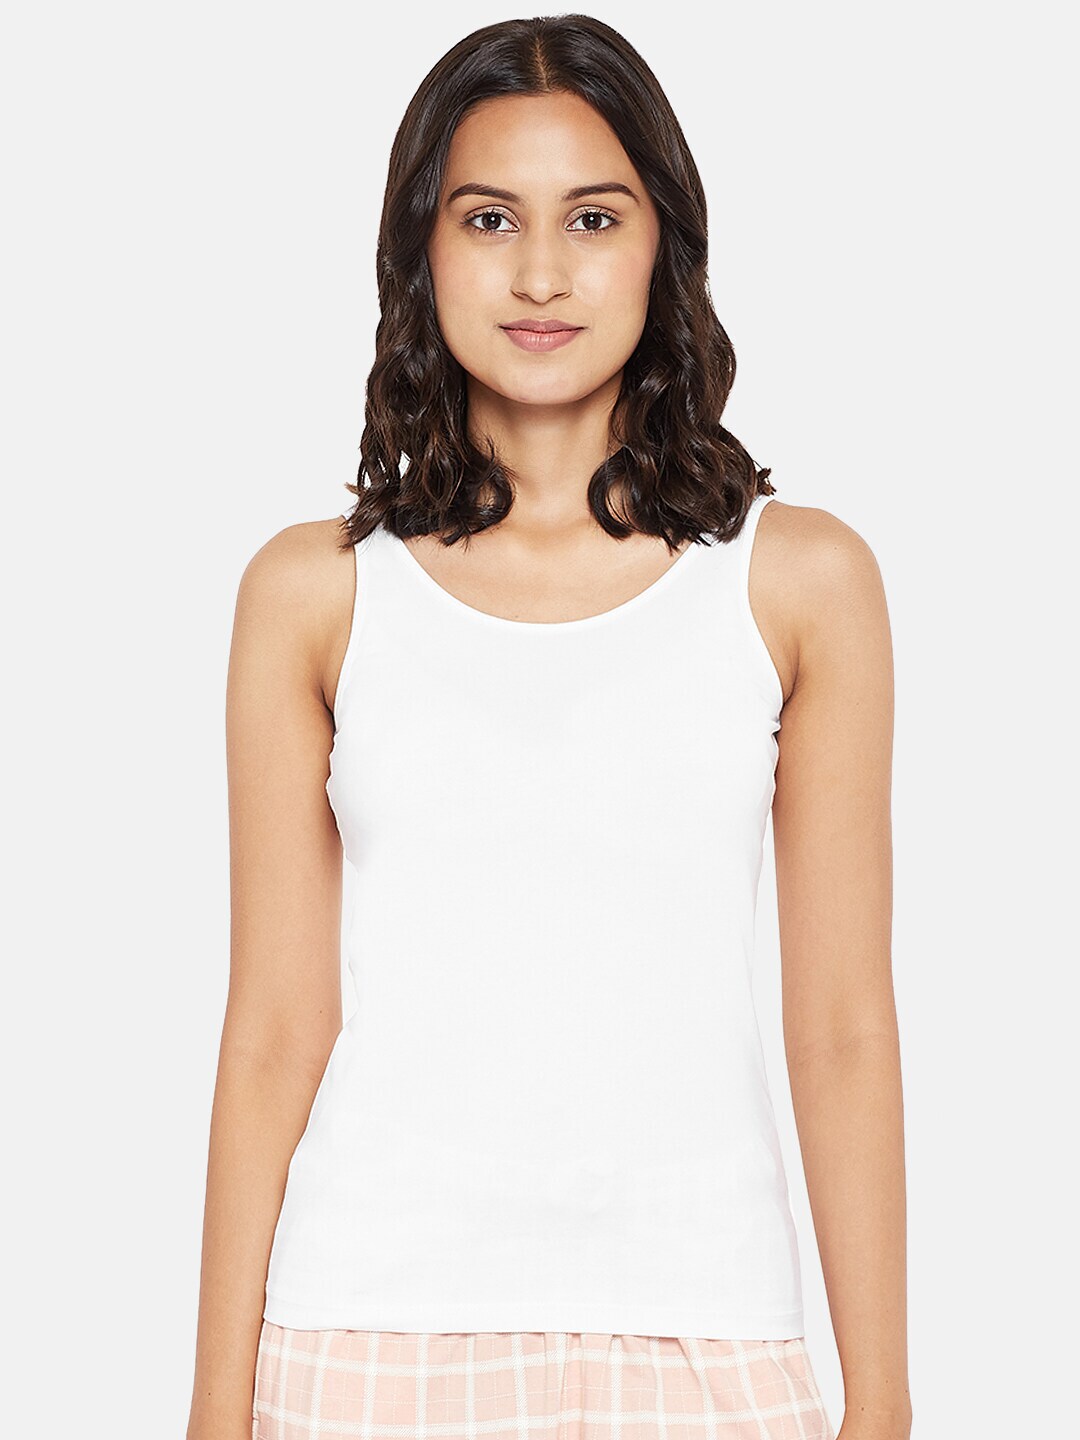 Dreamz by Pantaloons Womens White Regular Lounge Tshirt Price in India